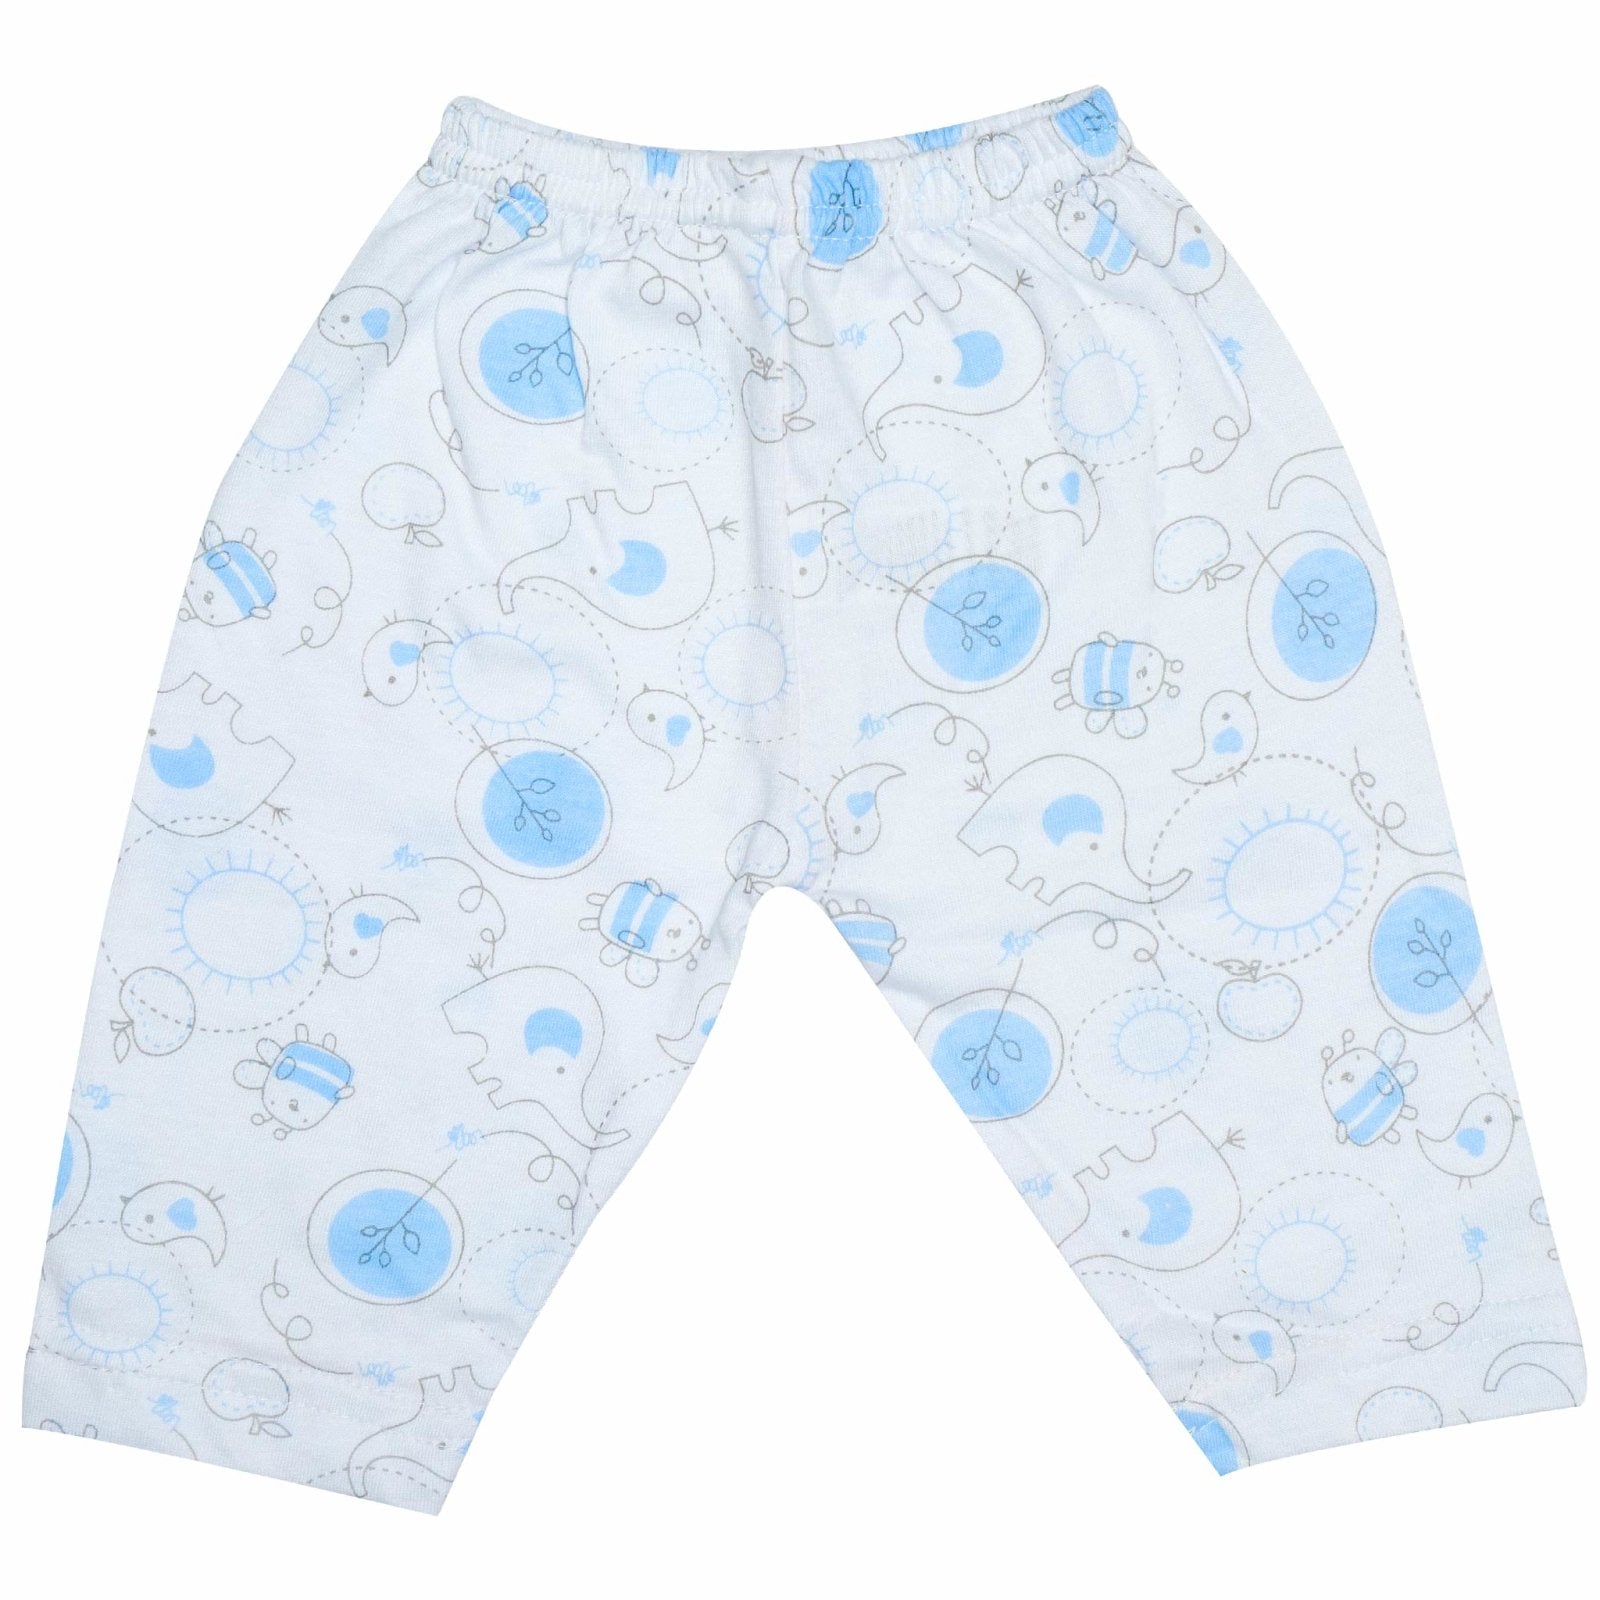 Pajama Set of 2 Blue Elephant Print by Little Darling